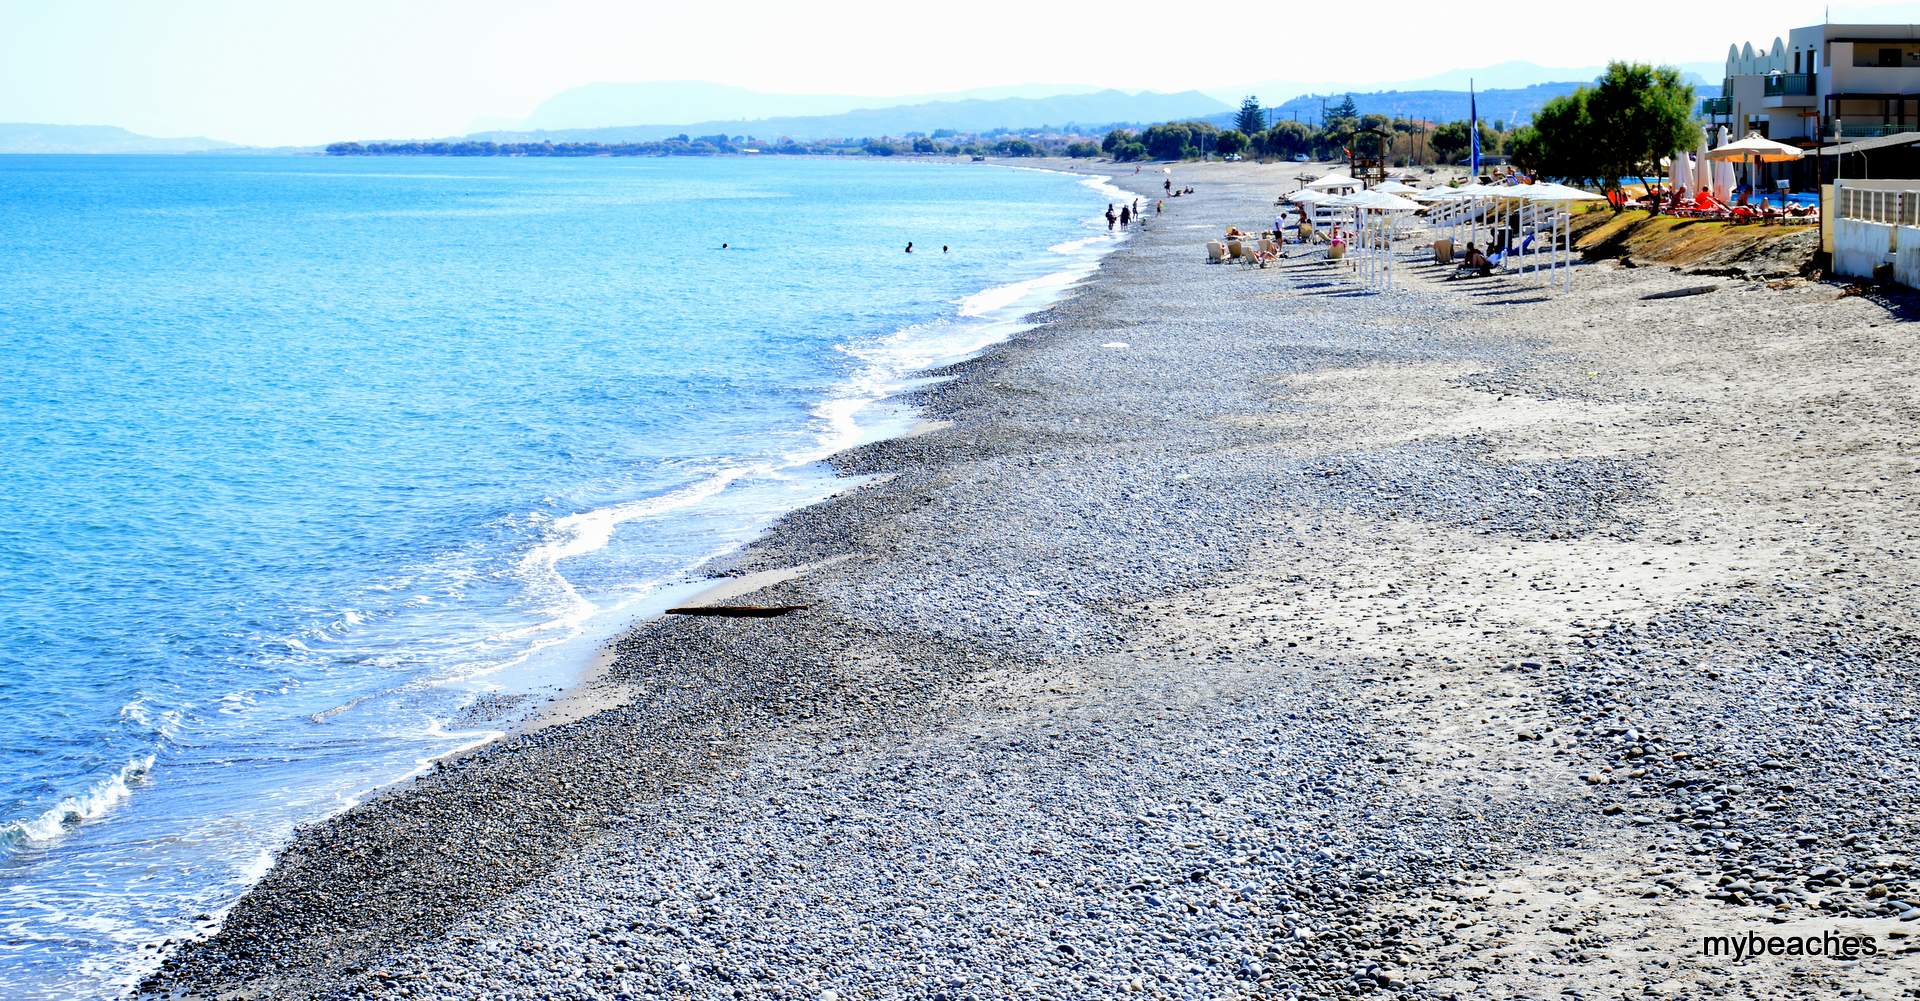 Kolimpari beach, Hania, Crete, Greece